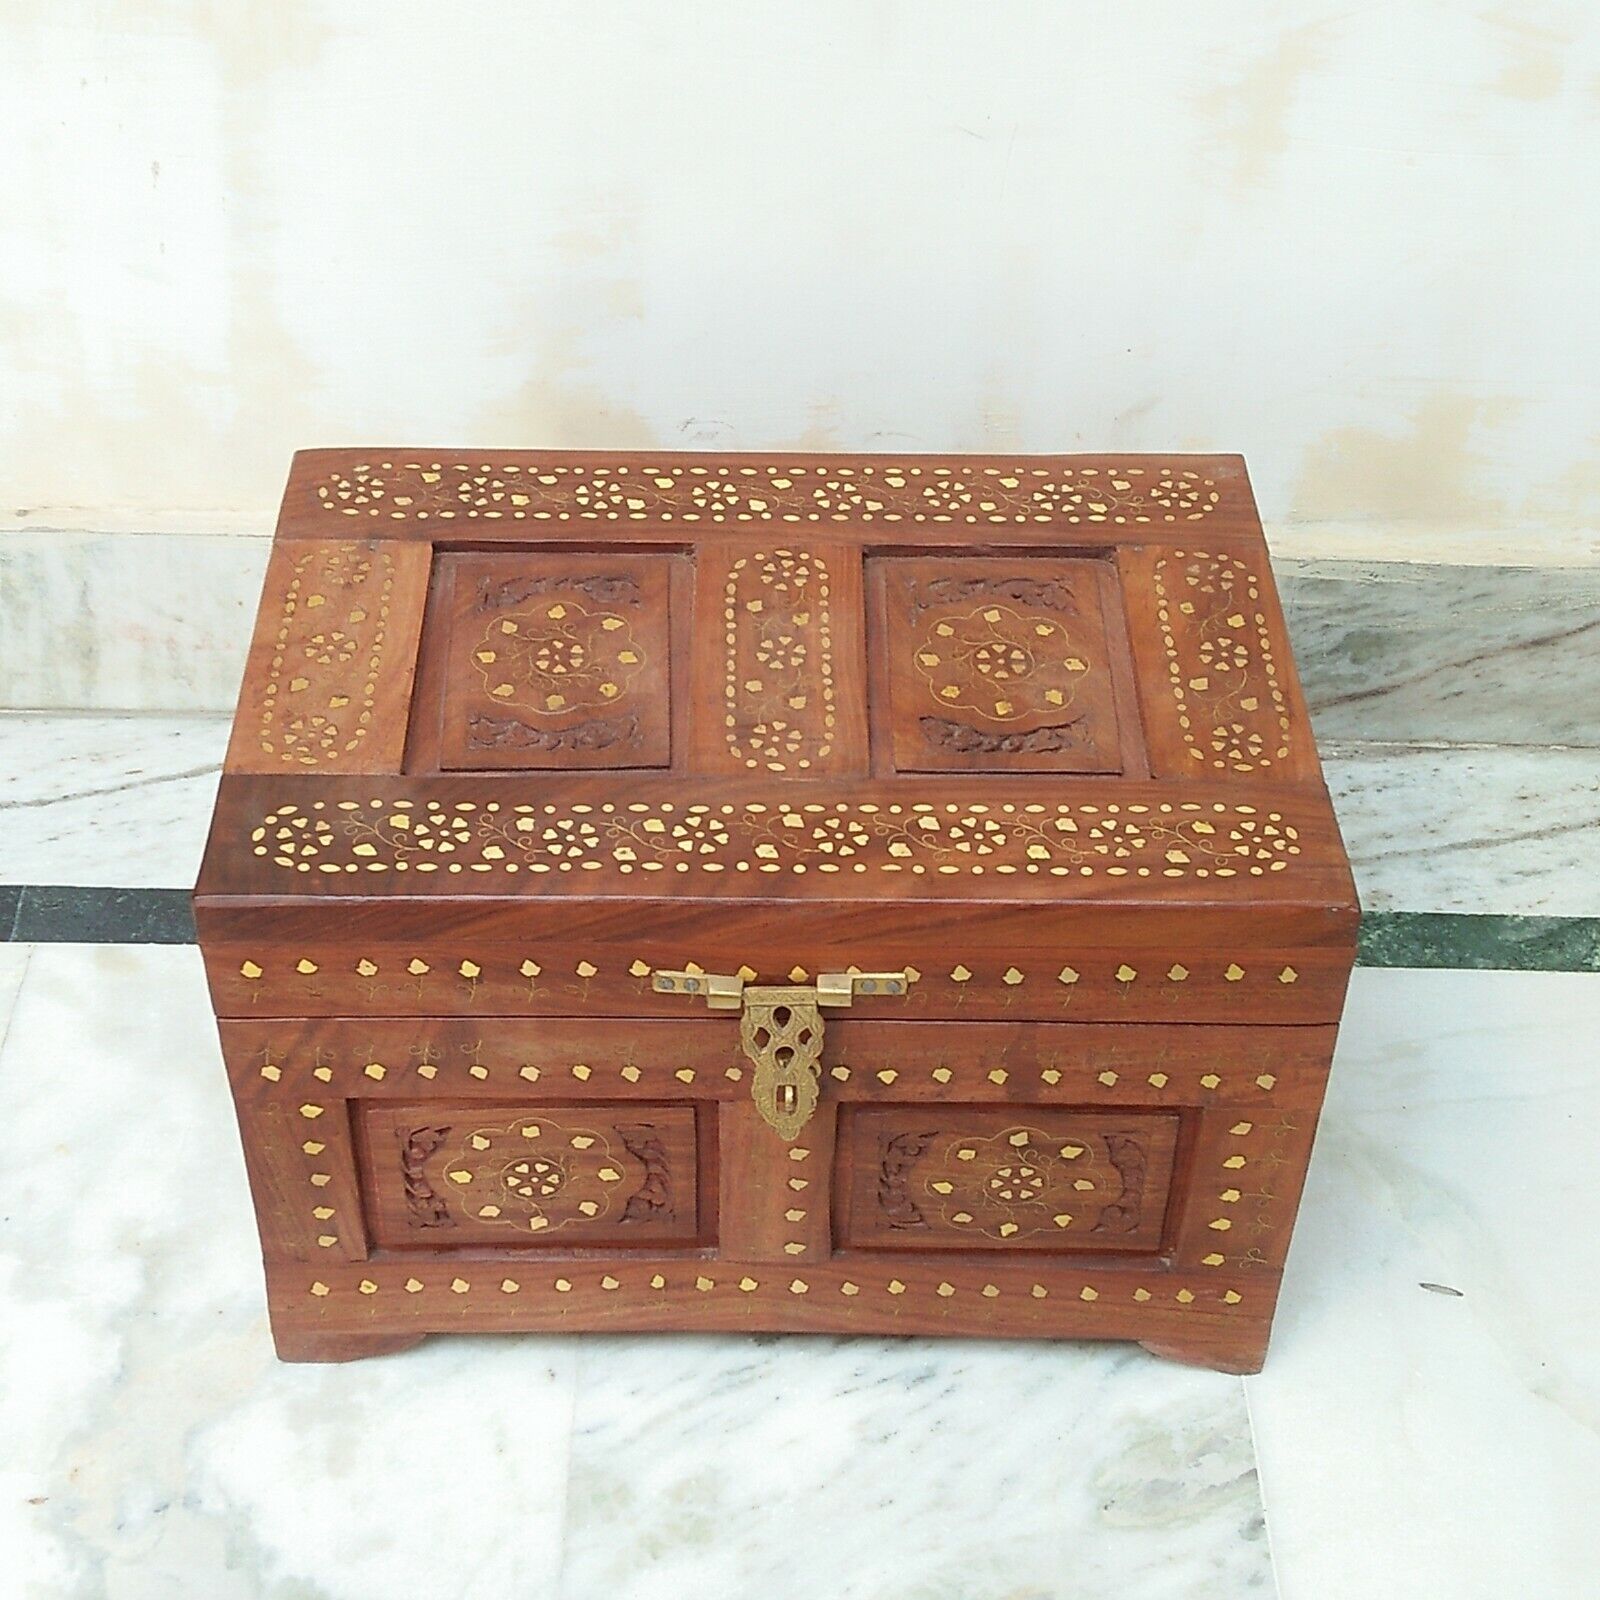 Wooden Chest Box Treasure Pirate Collectible Home Decorative Gift